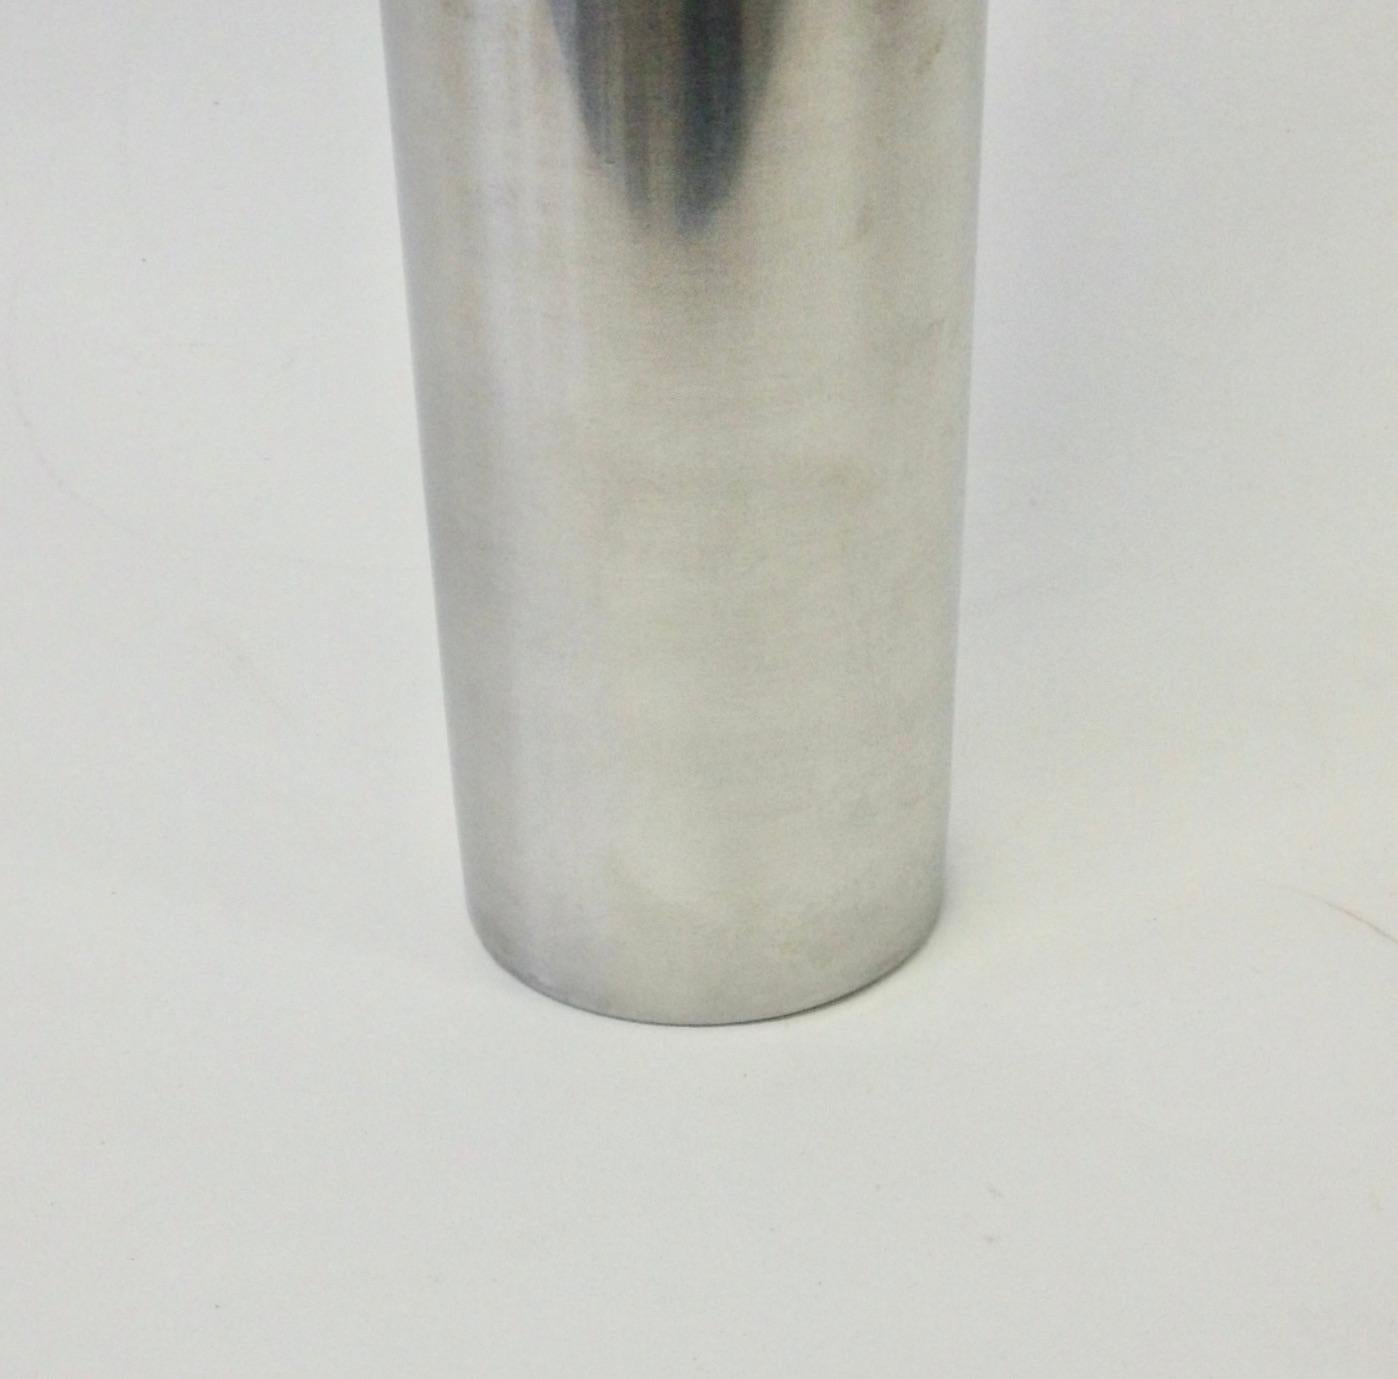 Nicely designed stainless steel cocktail shaker. Marked Gene stainless Sweden.